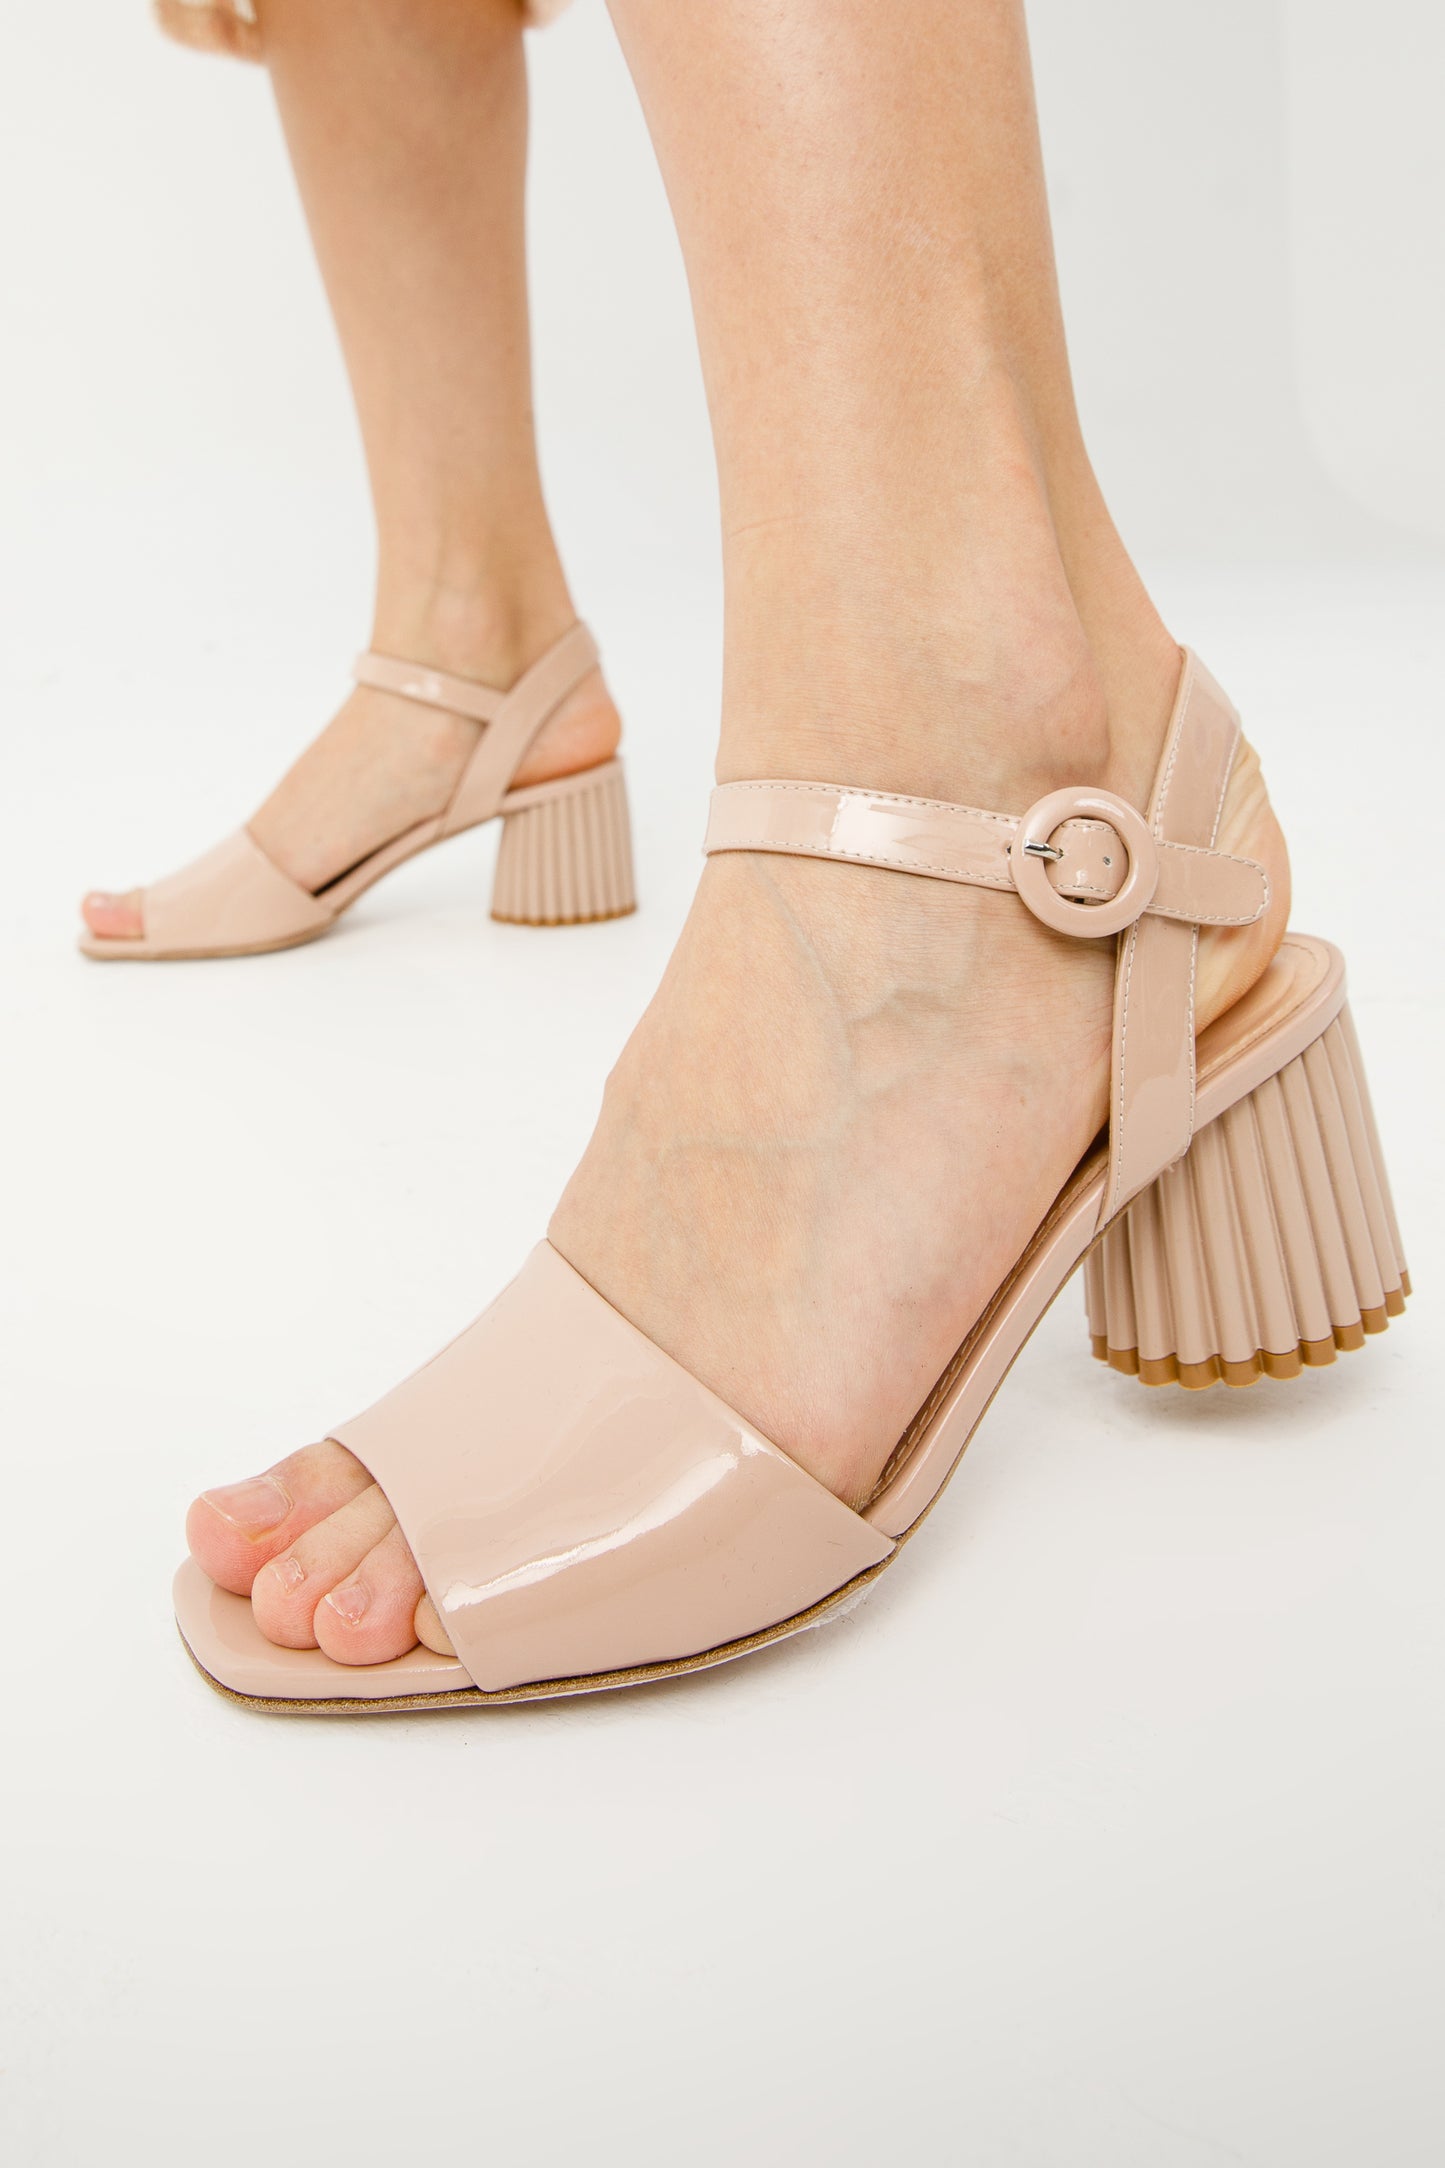 The Bamba Cream Patent Leather Women Sandal